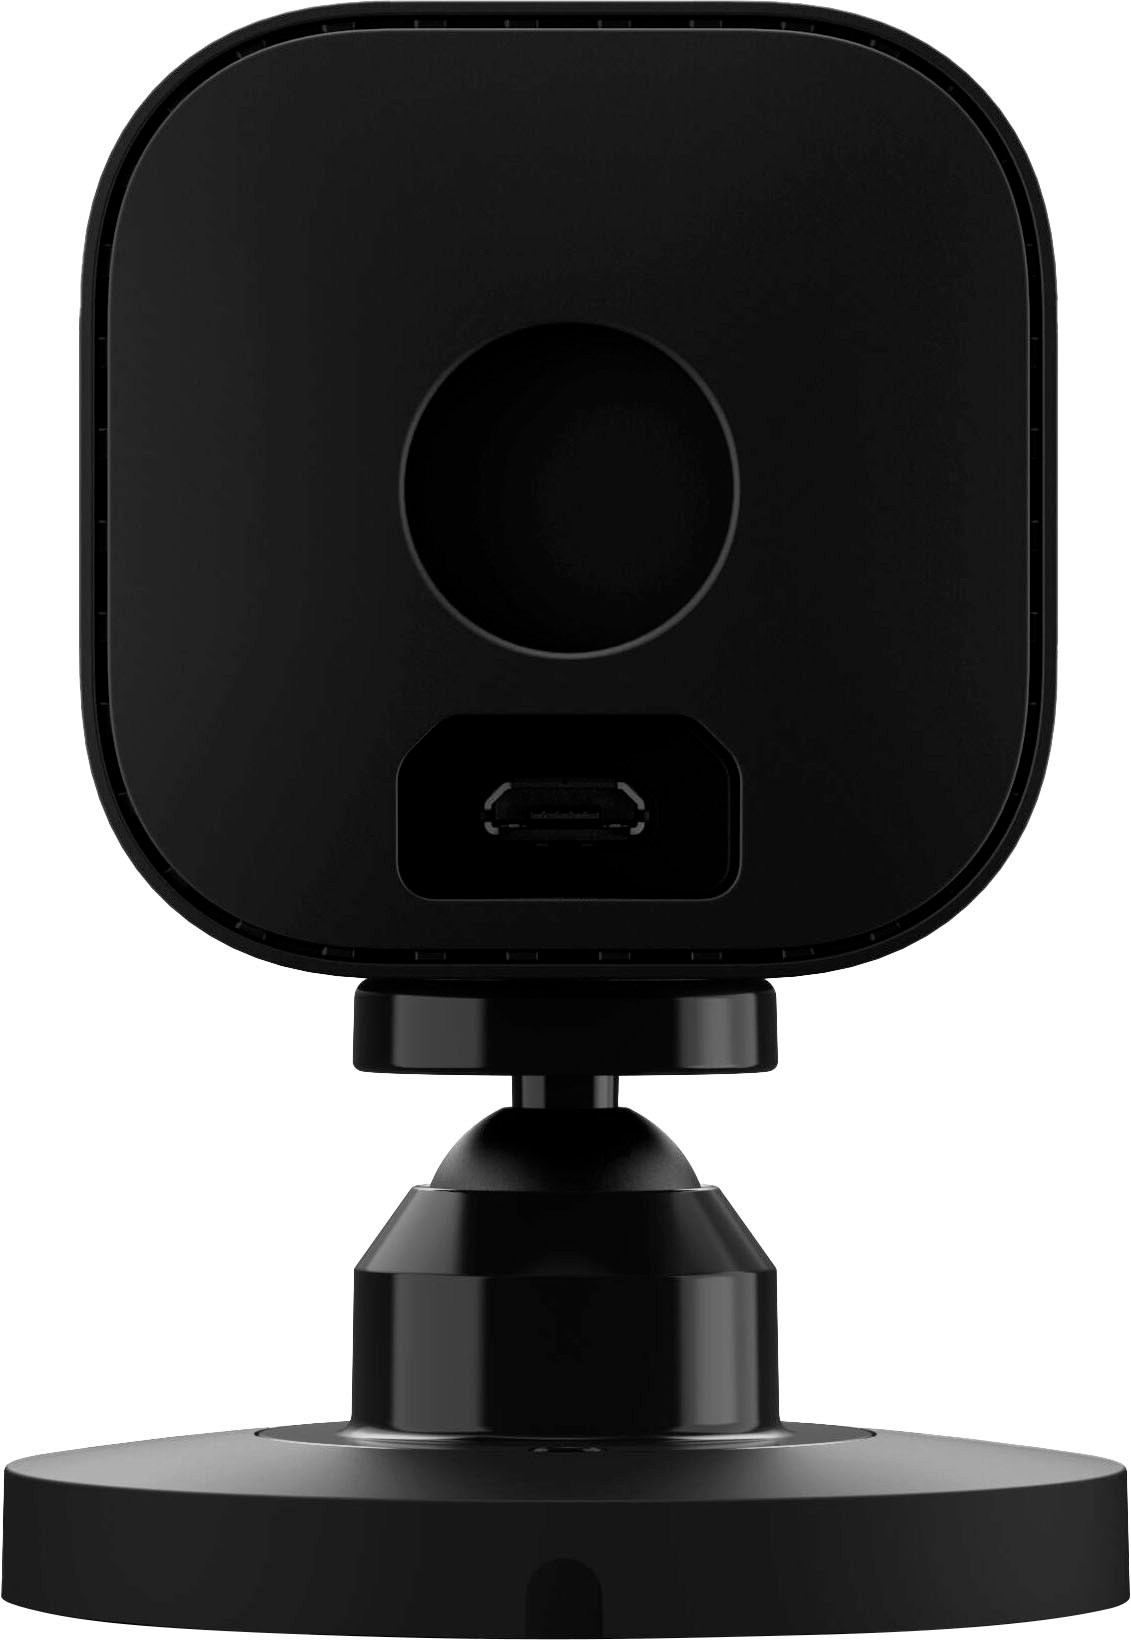 Blink Mini Indoor 1080p Wireless Security Camera (2-Pack) White B07X27VK3D  - Best Buy